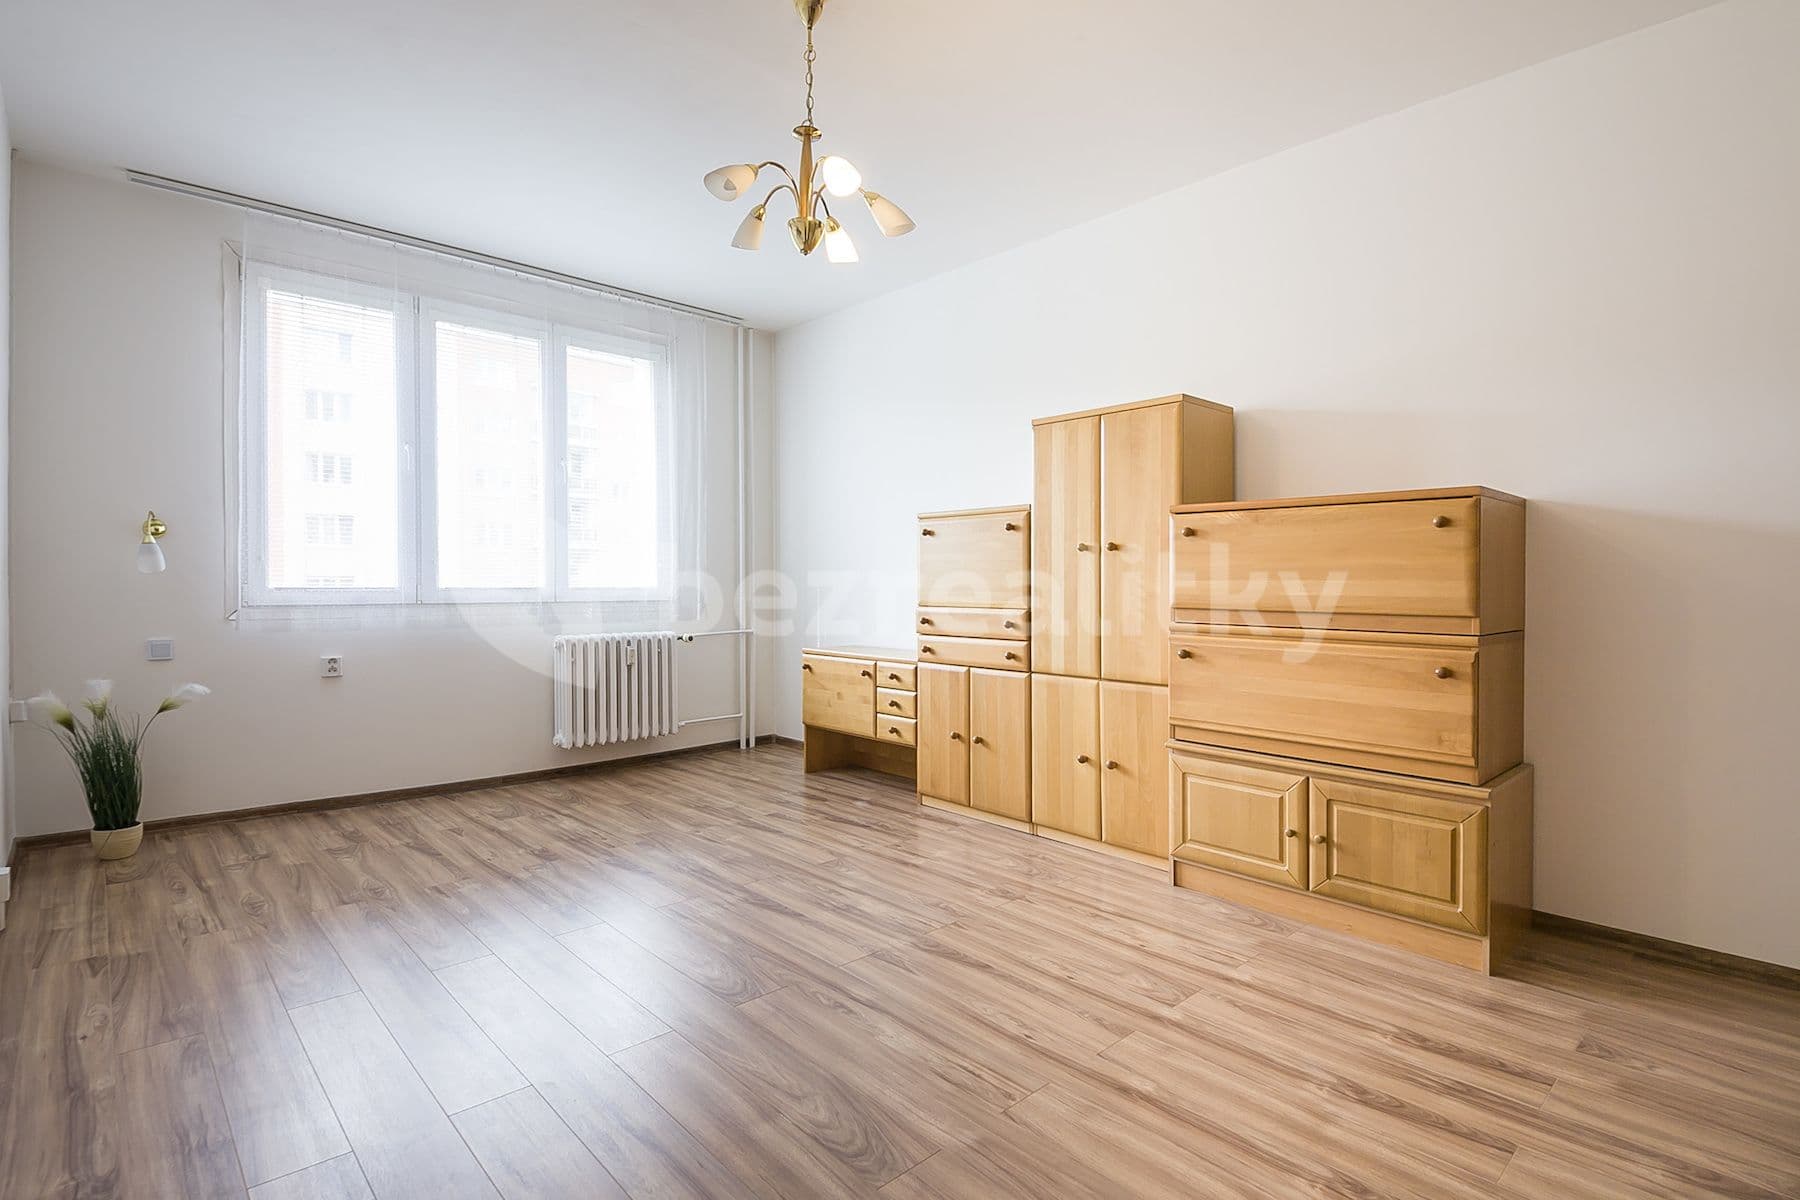 2 bedroom flat for sale, 58 m², Zárubova, Prague, Prague